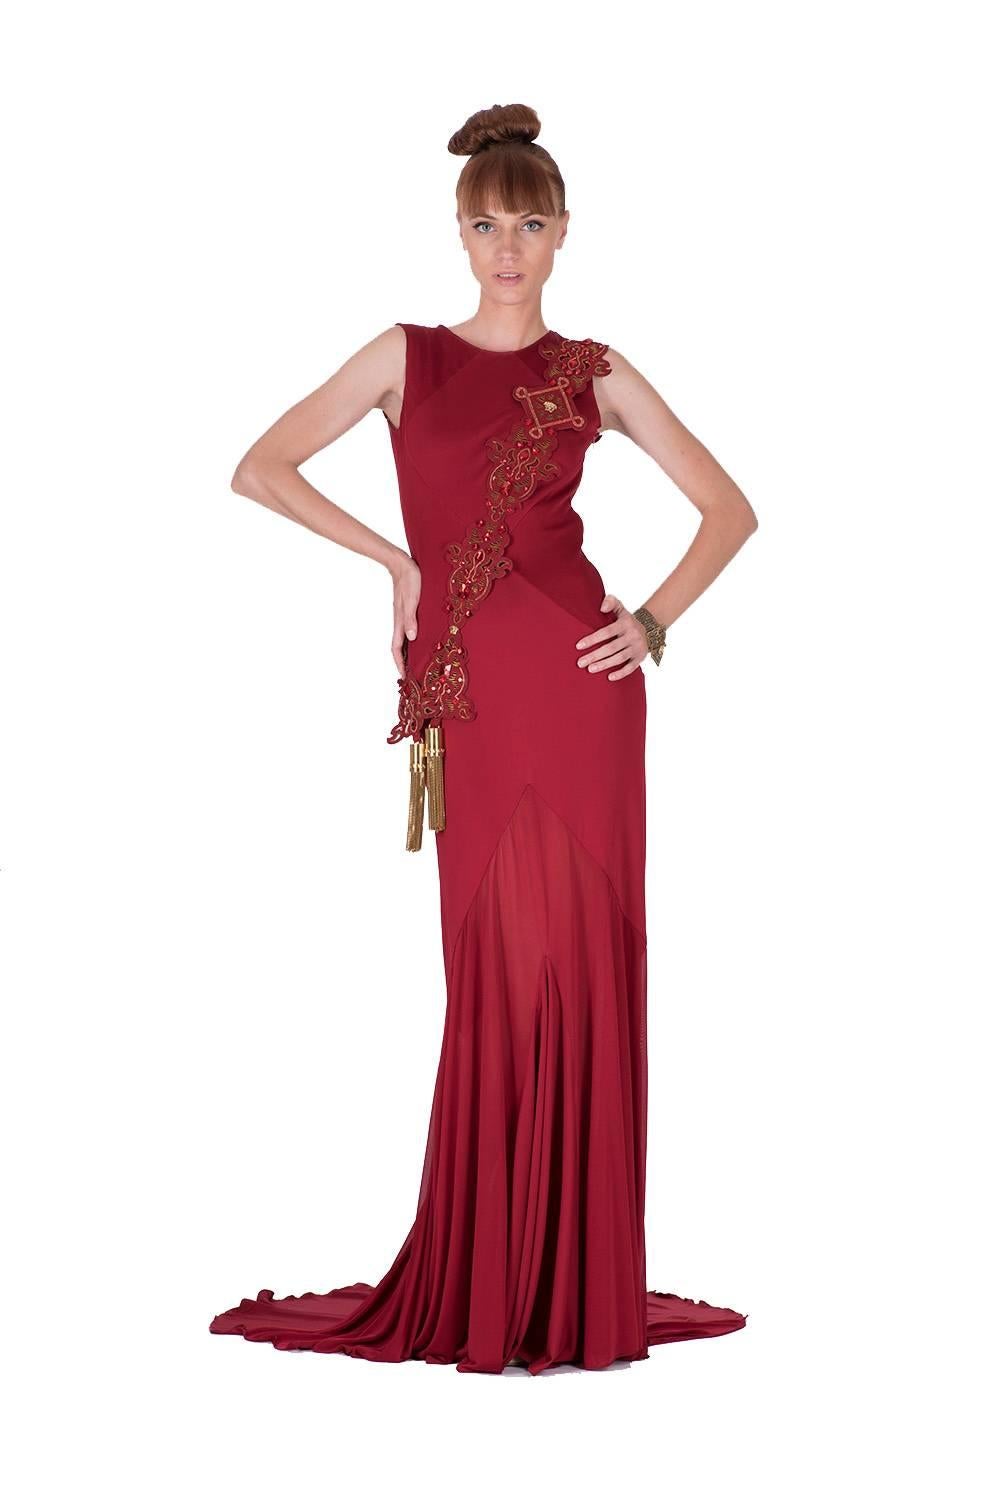 versace red dress